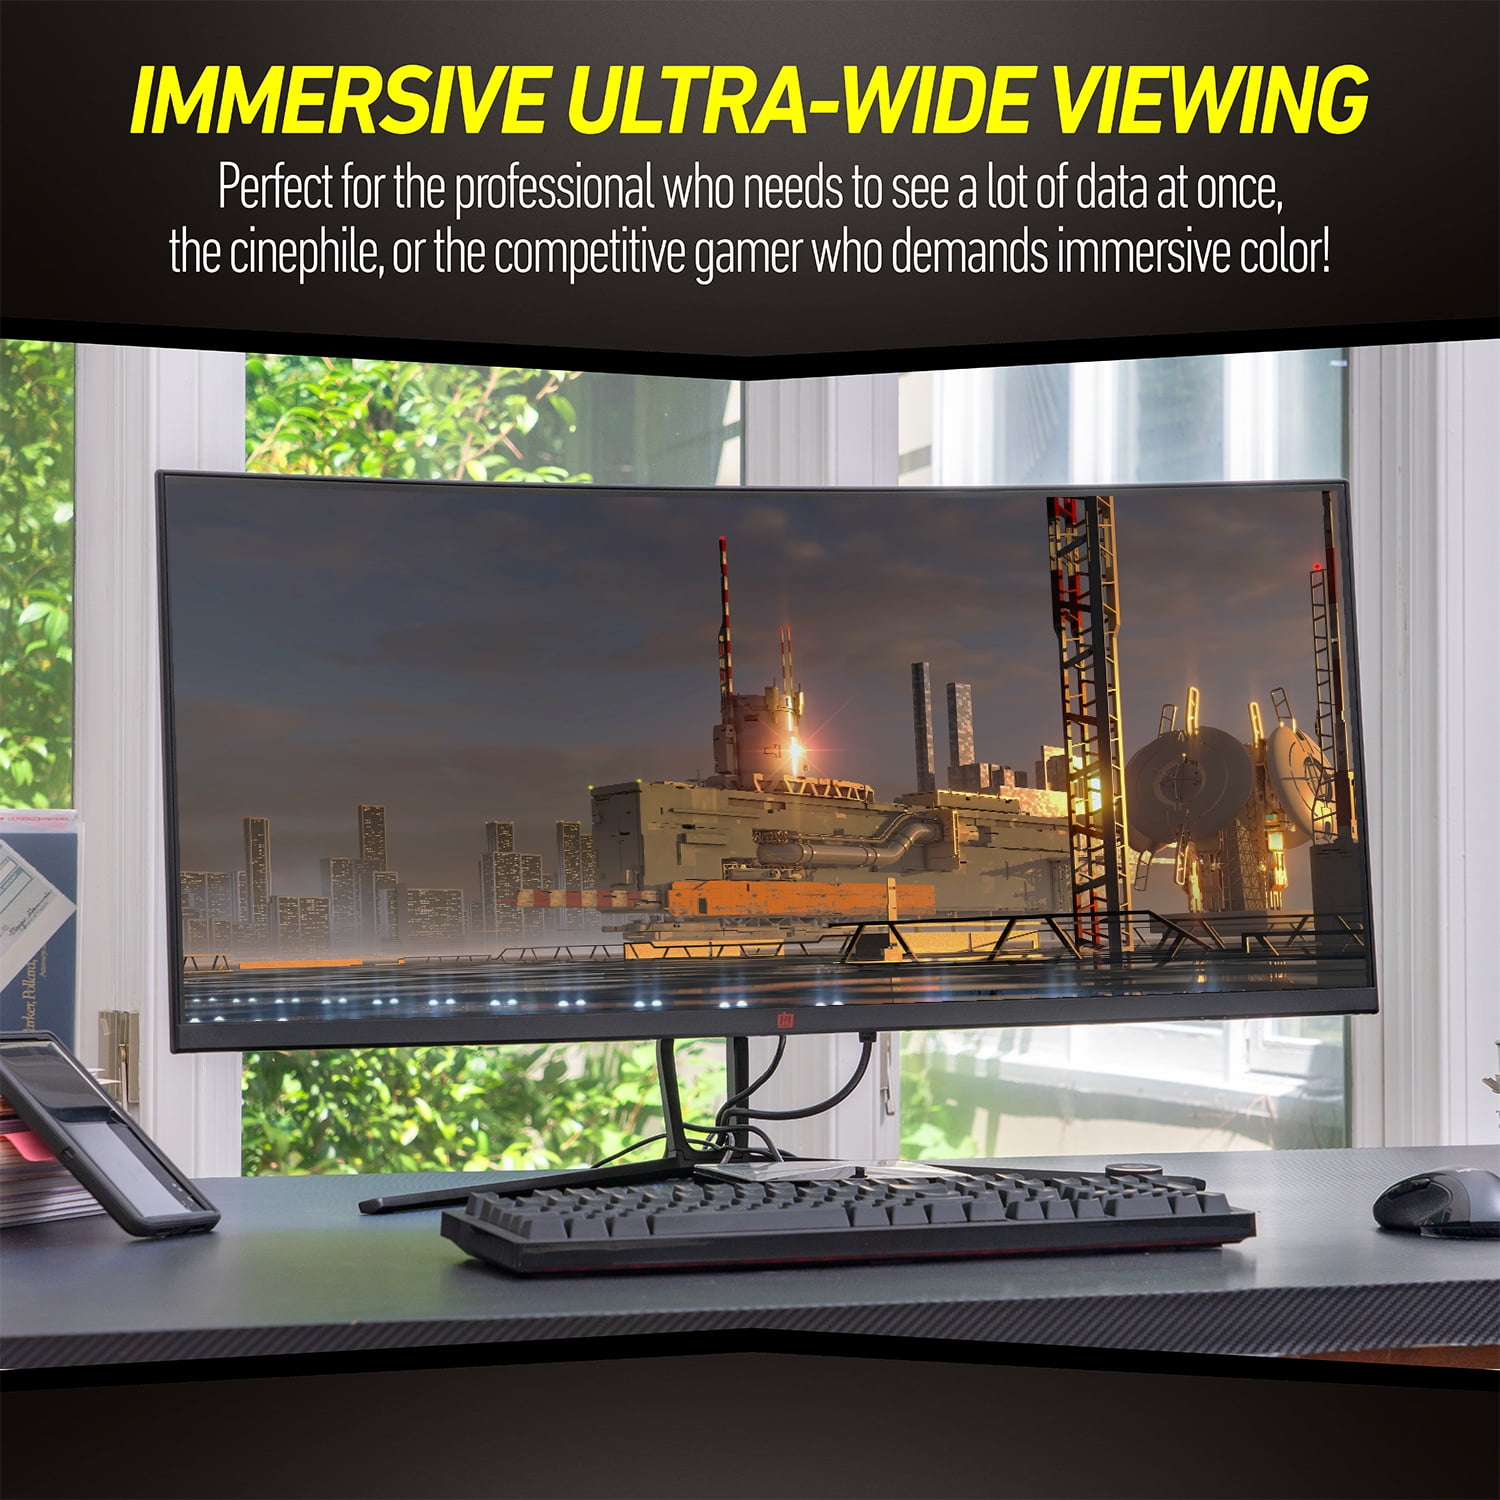 Deco Gear 35” Curved Gaming Ultrawide Monitor, 3440x1440, 120hz, 1ms MPRT,  21:9, 99% sRGB